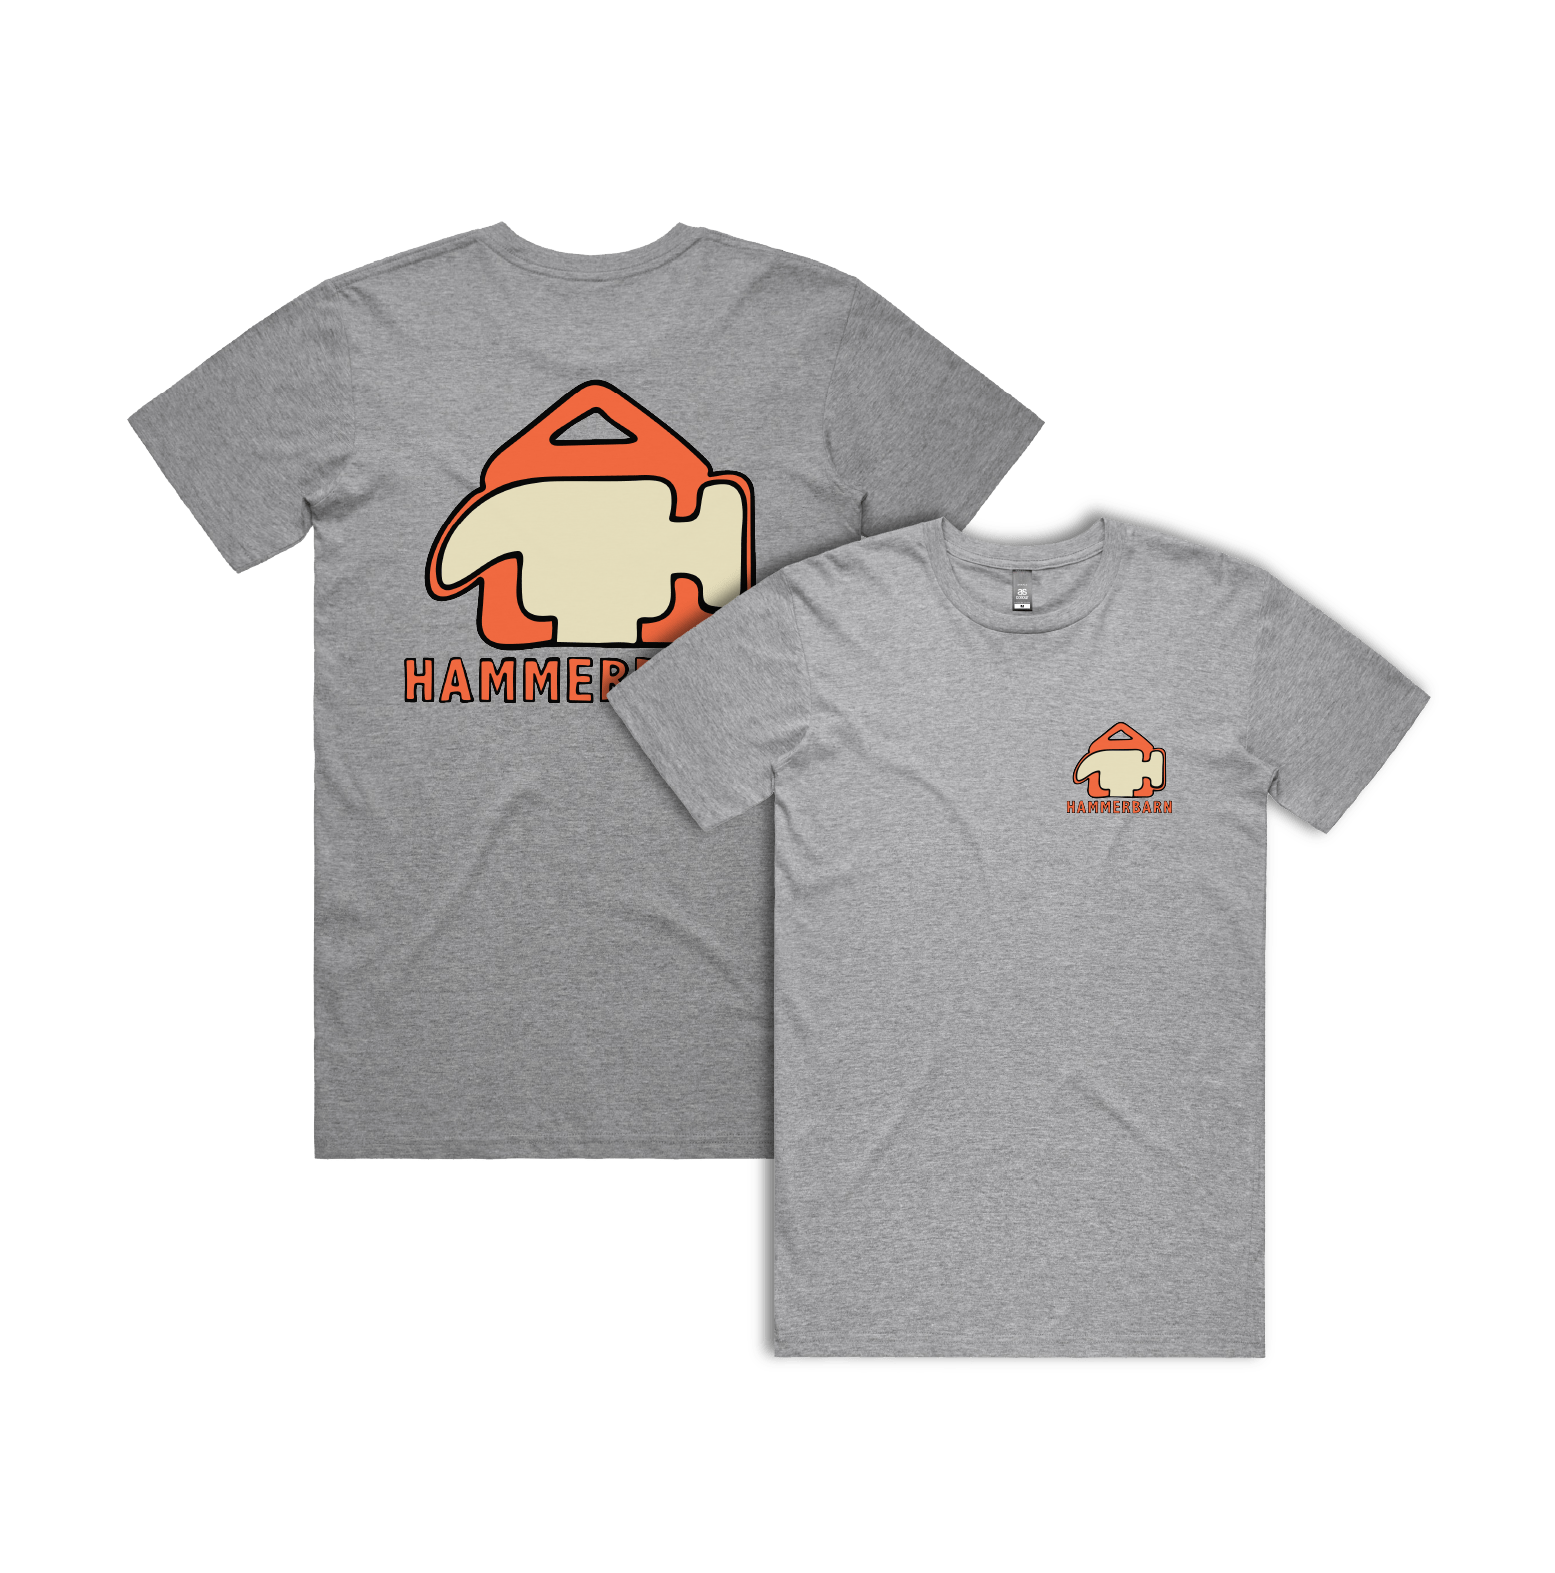 S / Grey / Small Front & Large Back Design Hammerbarn 🔨 - Men's T Shirt